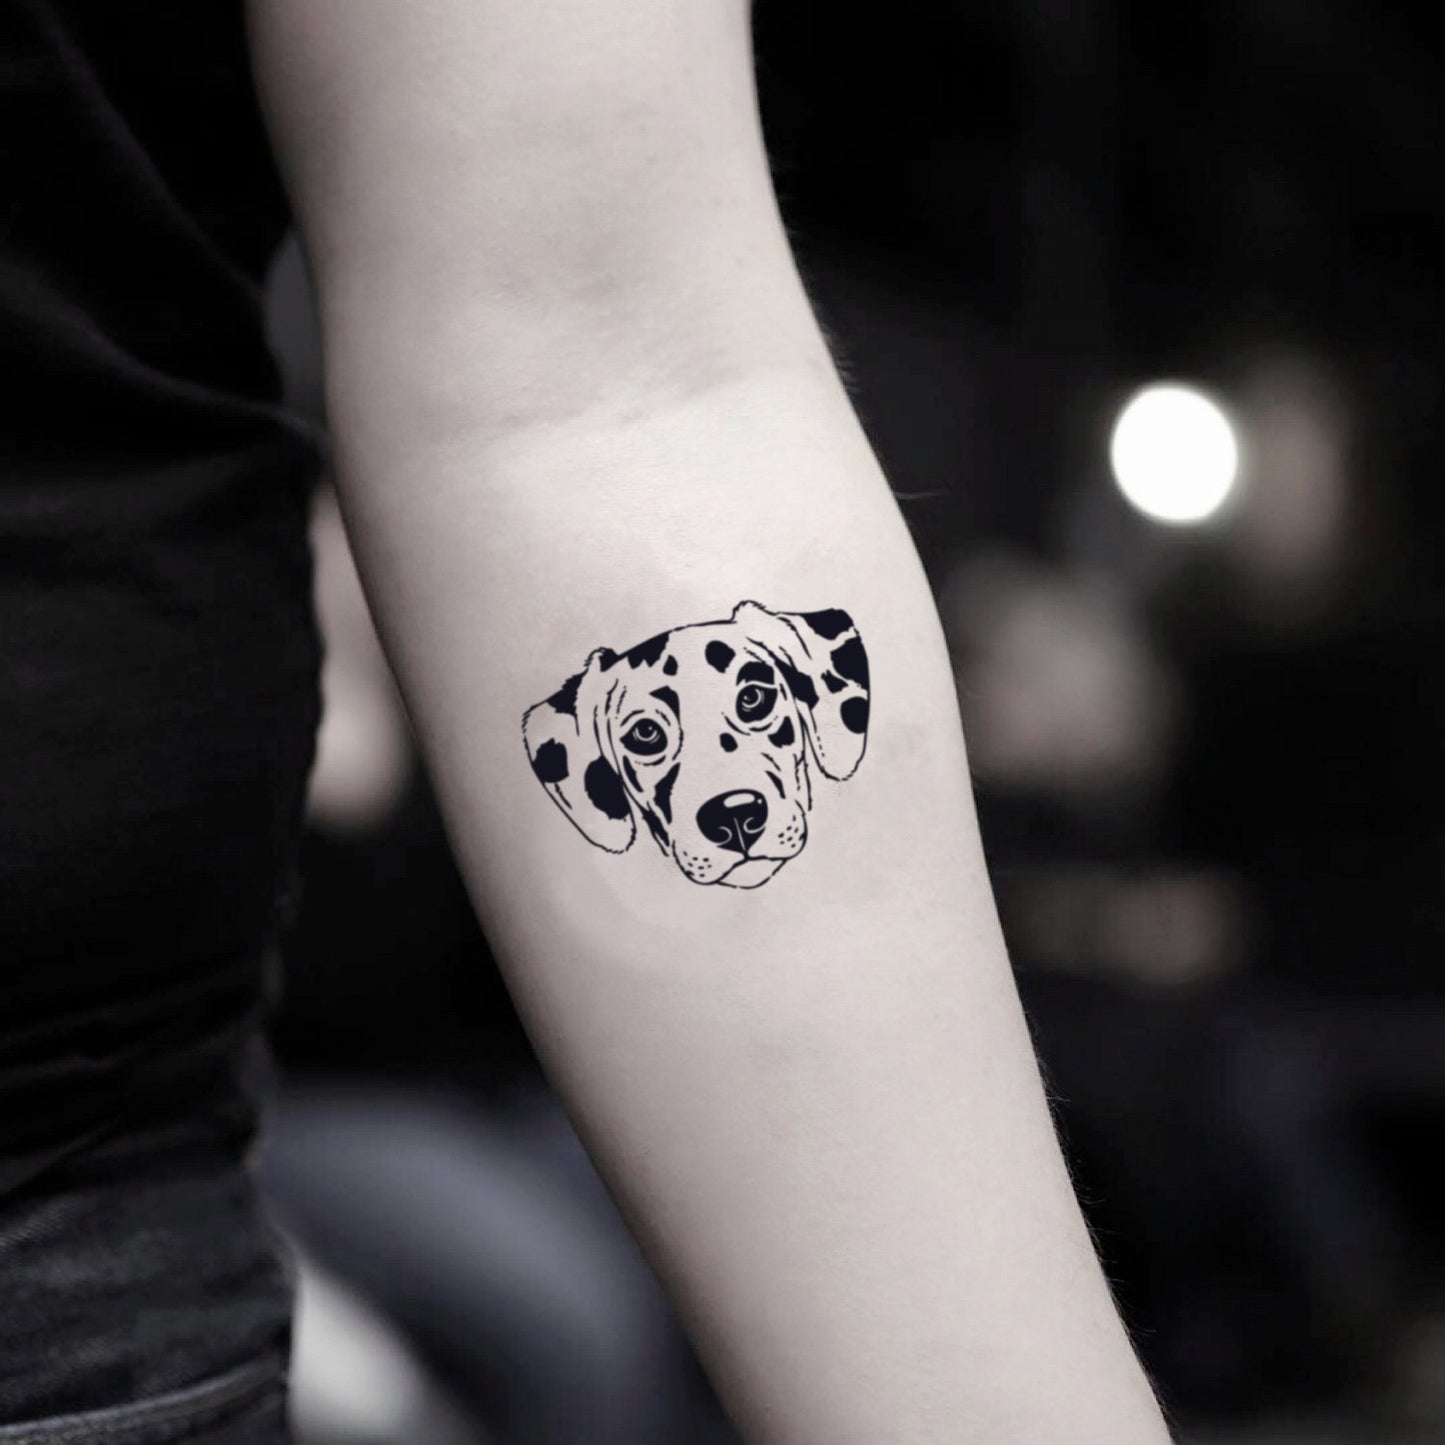 fake small dalmatian animal temporary tattoo sticker design idea on inner arm